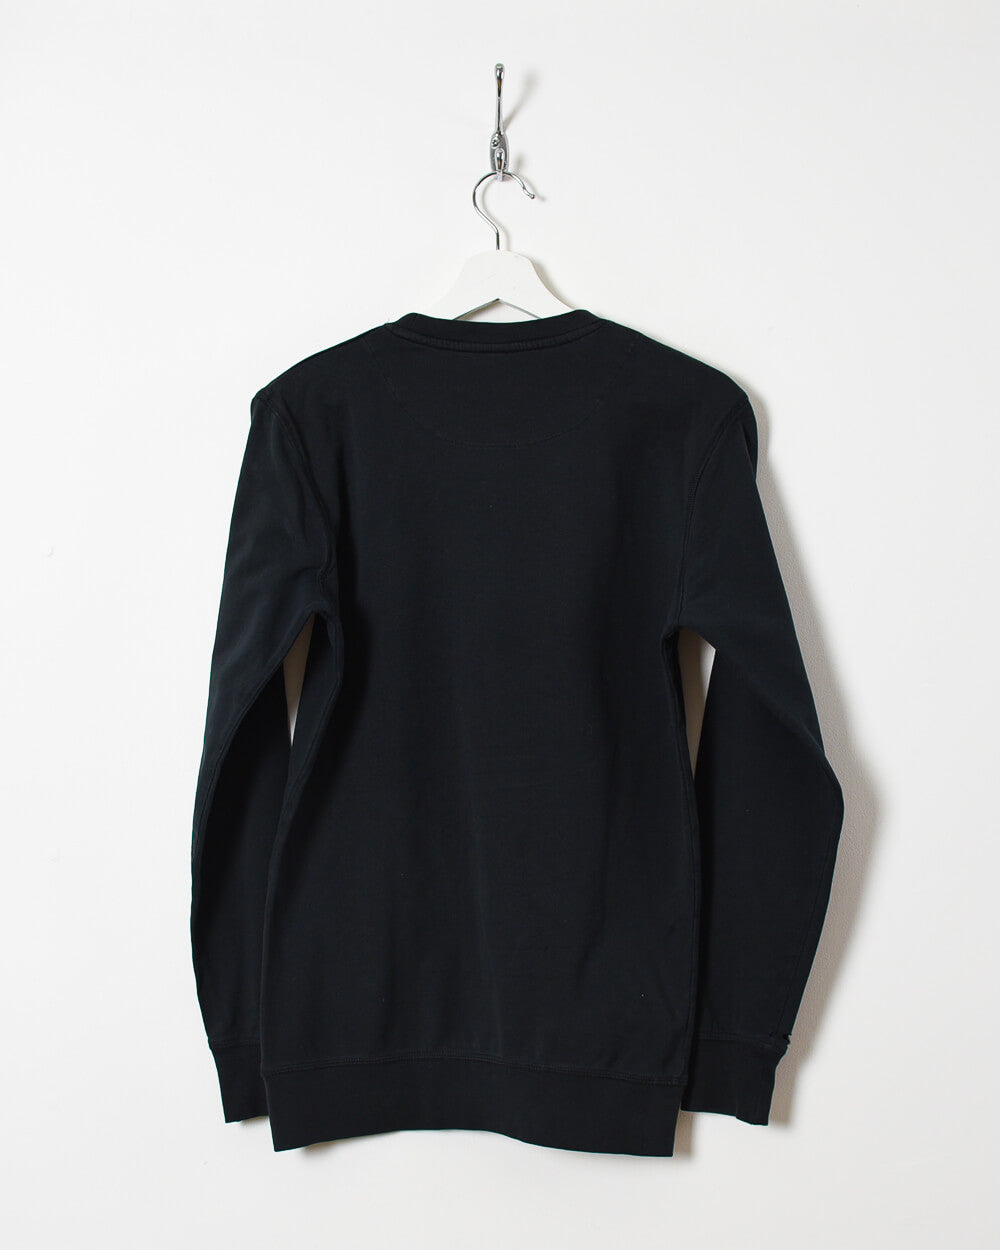 Black Tupac Sweatshirt - Medium